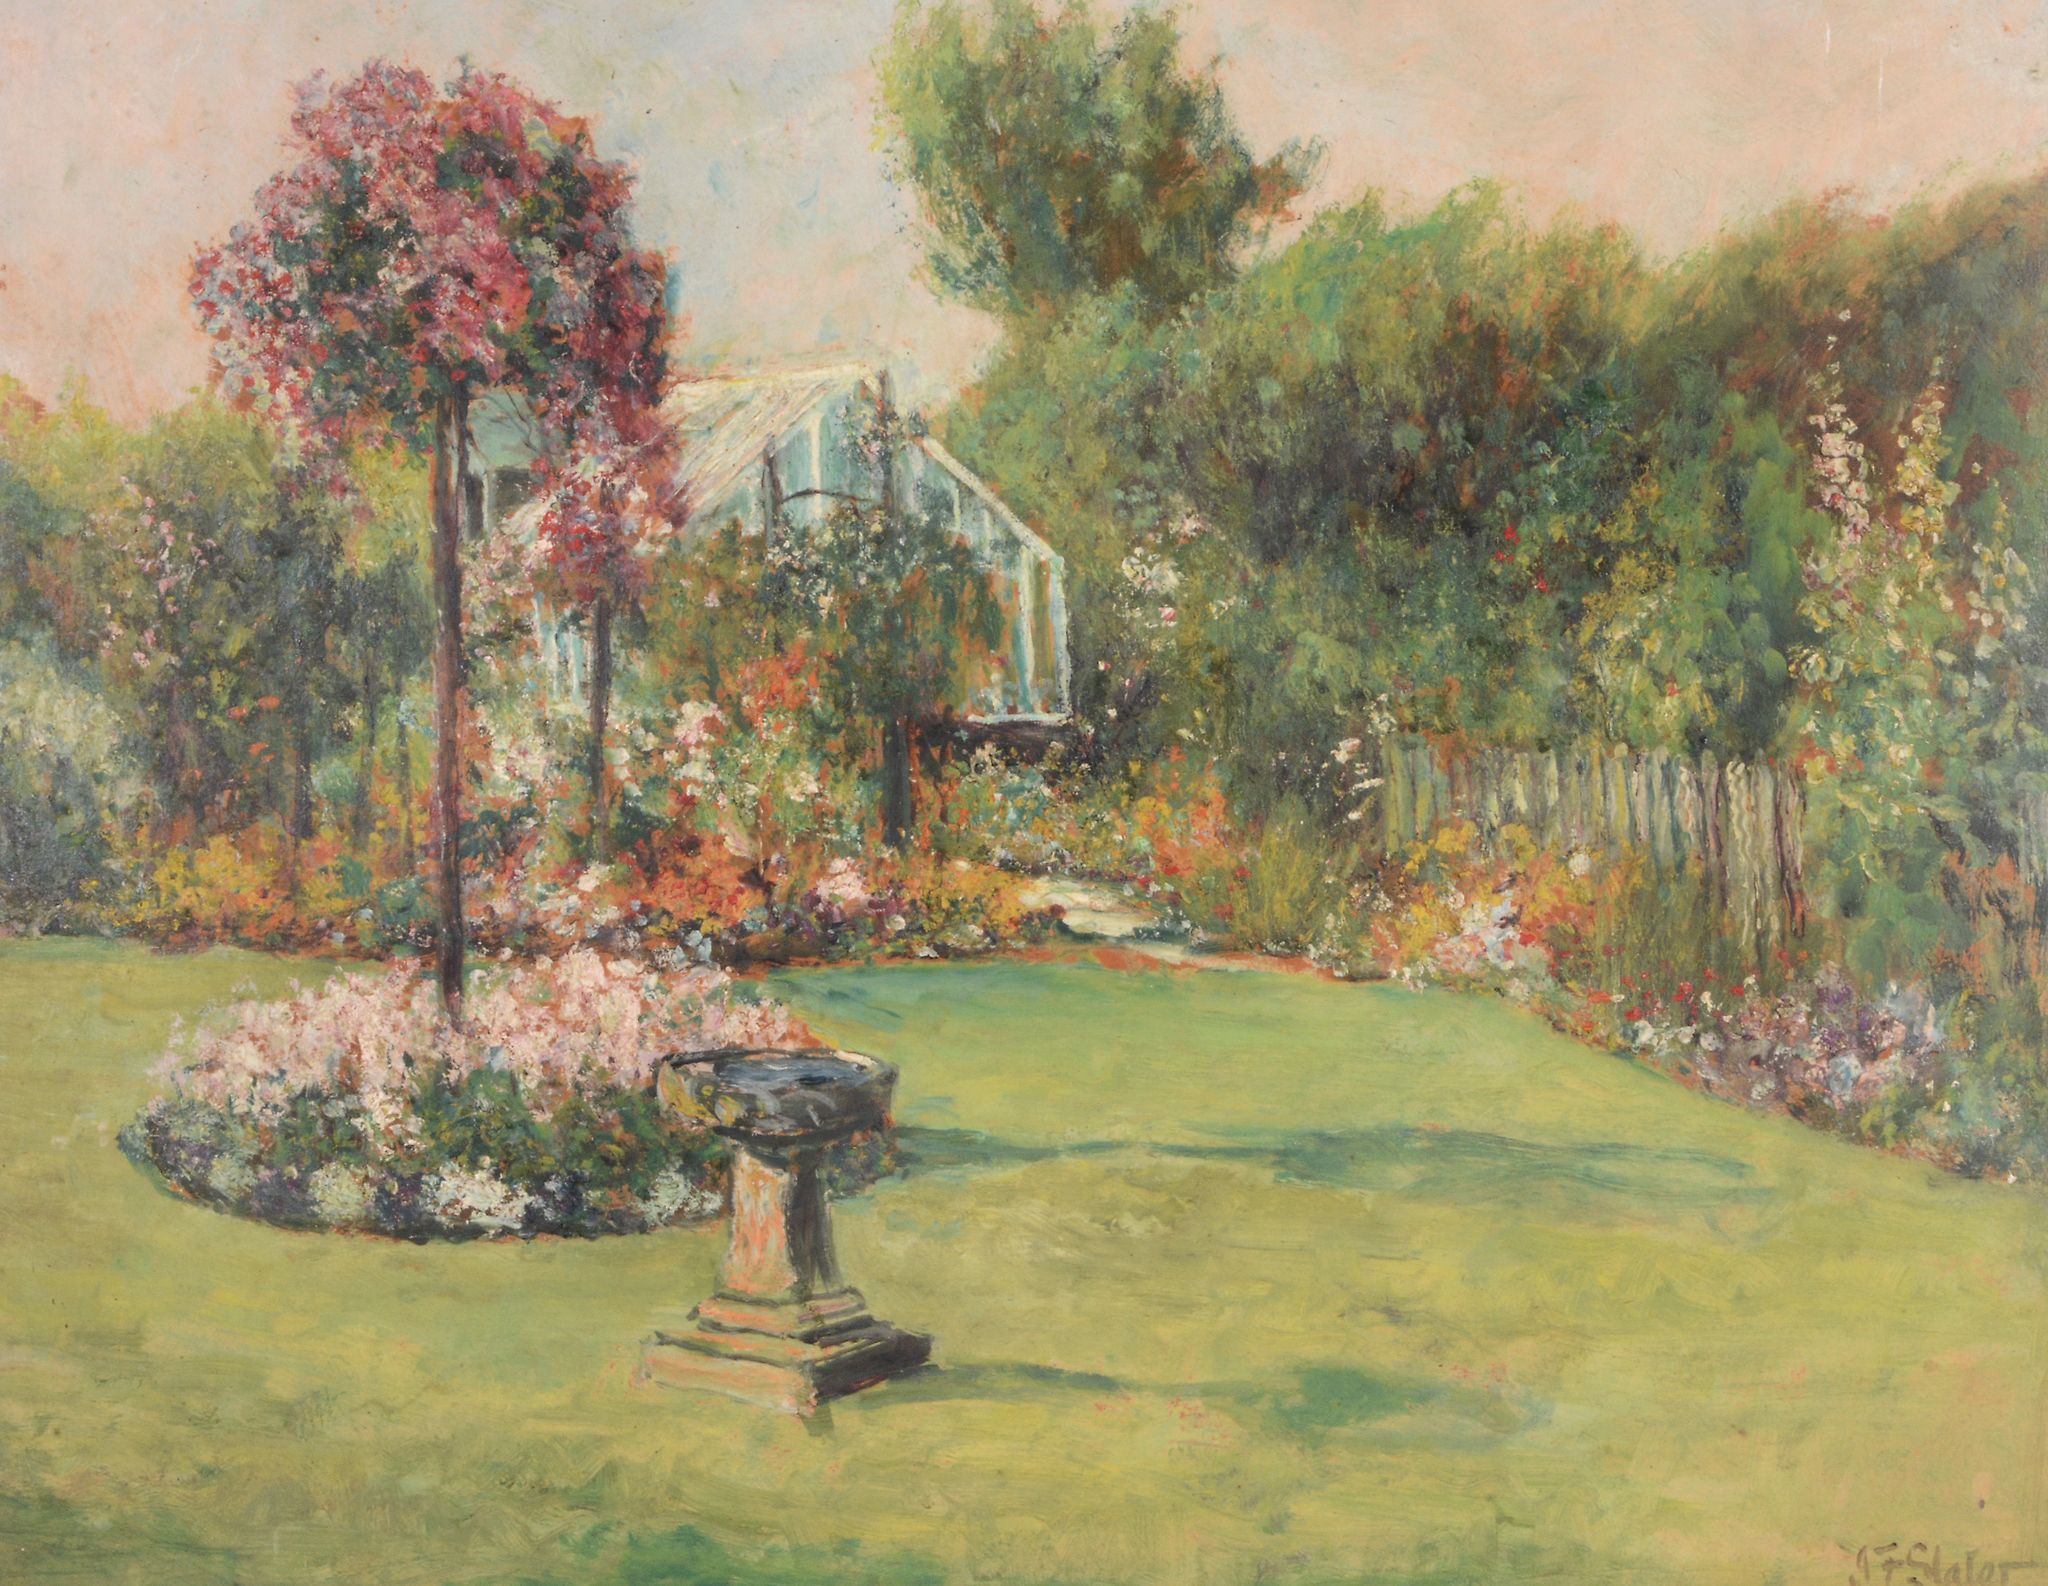 John Falconar Slater (1857-1937) - Garden in bloom  Oil on board Signed lower right 47 x 58.5 cm.(18